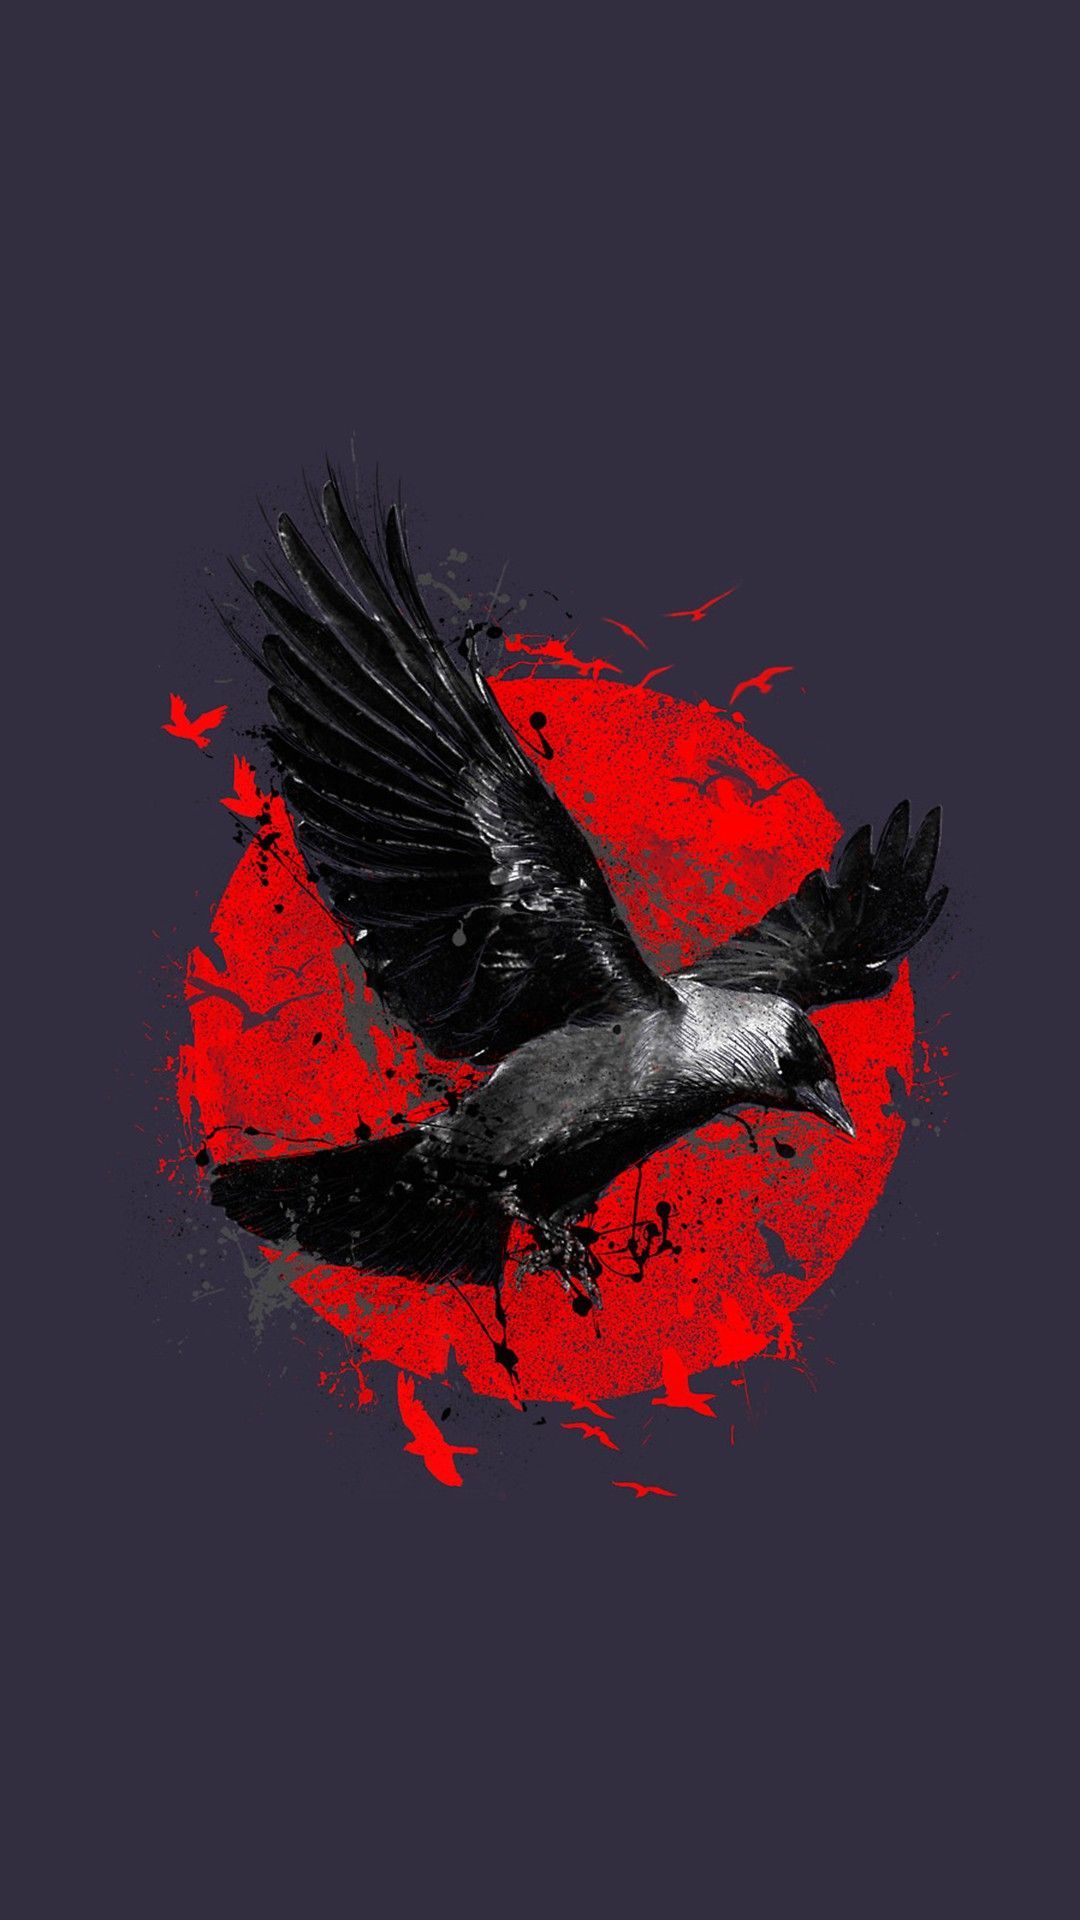 Raven Wallpaper - NawPic